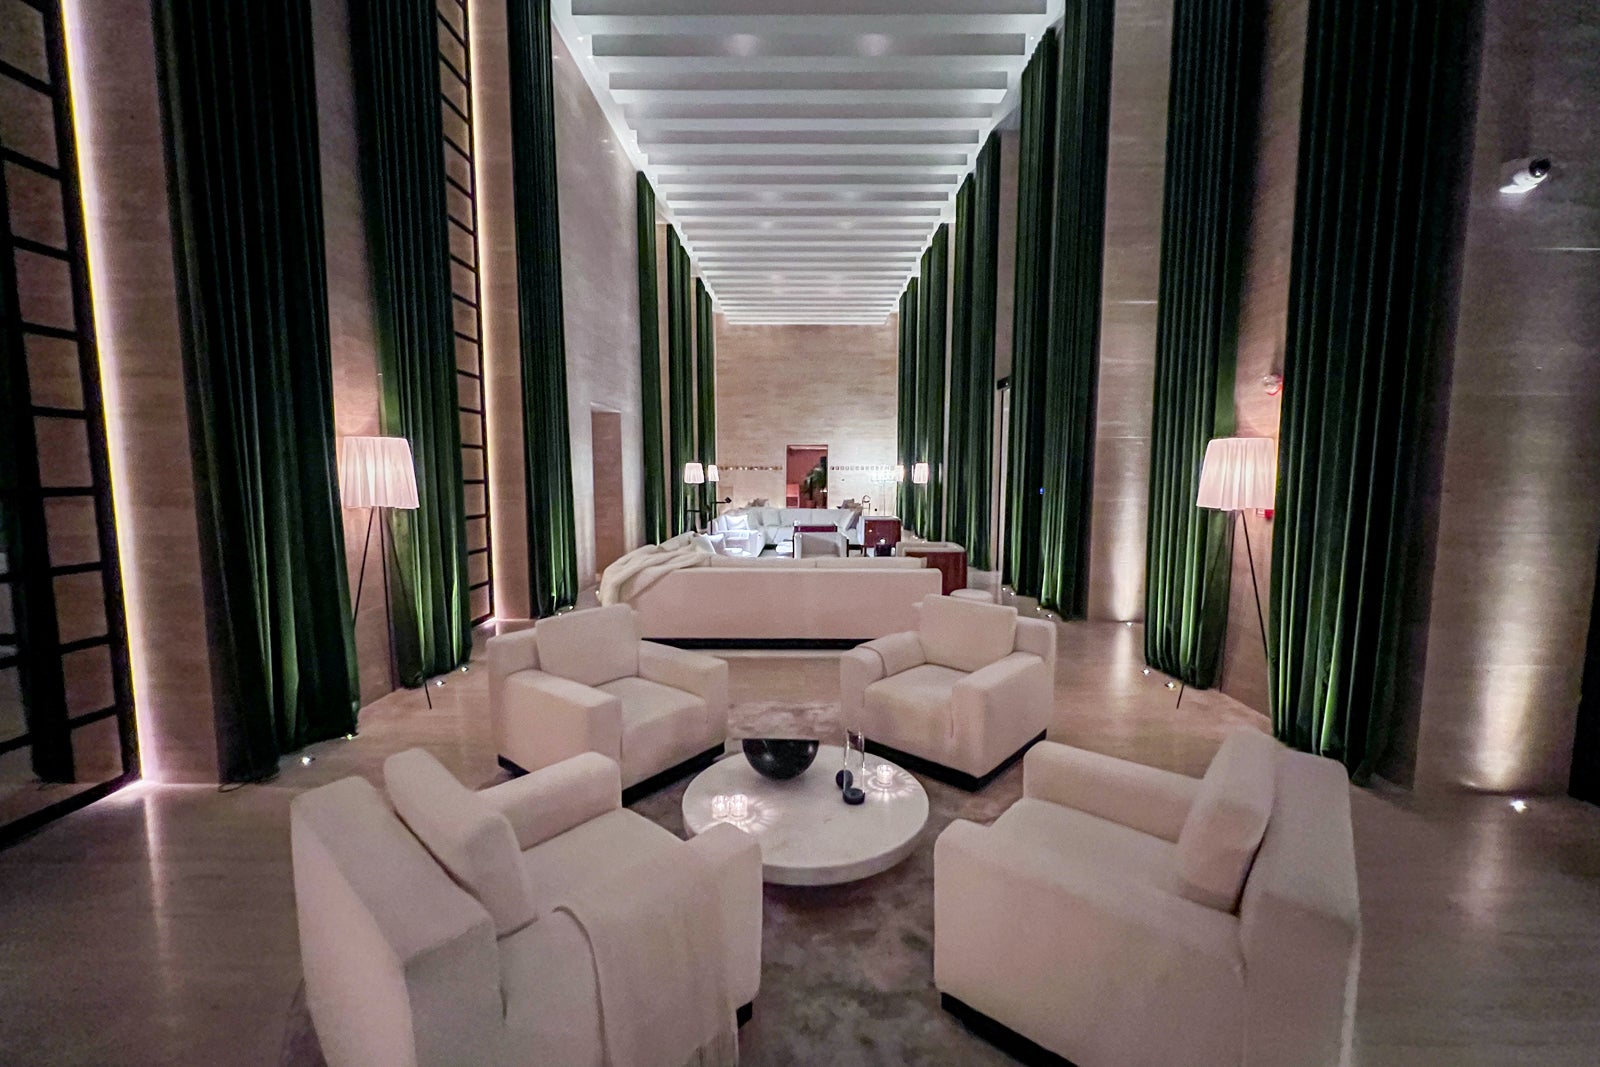 A luxurious lobby of a hotel